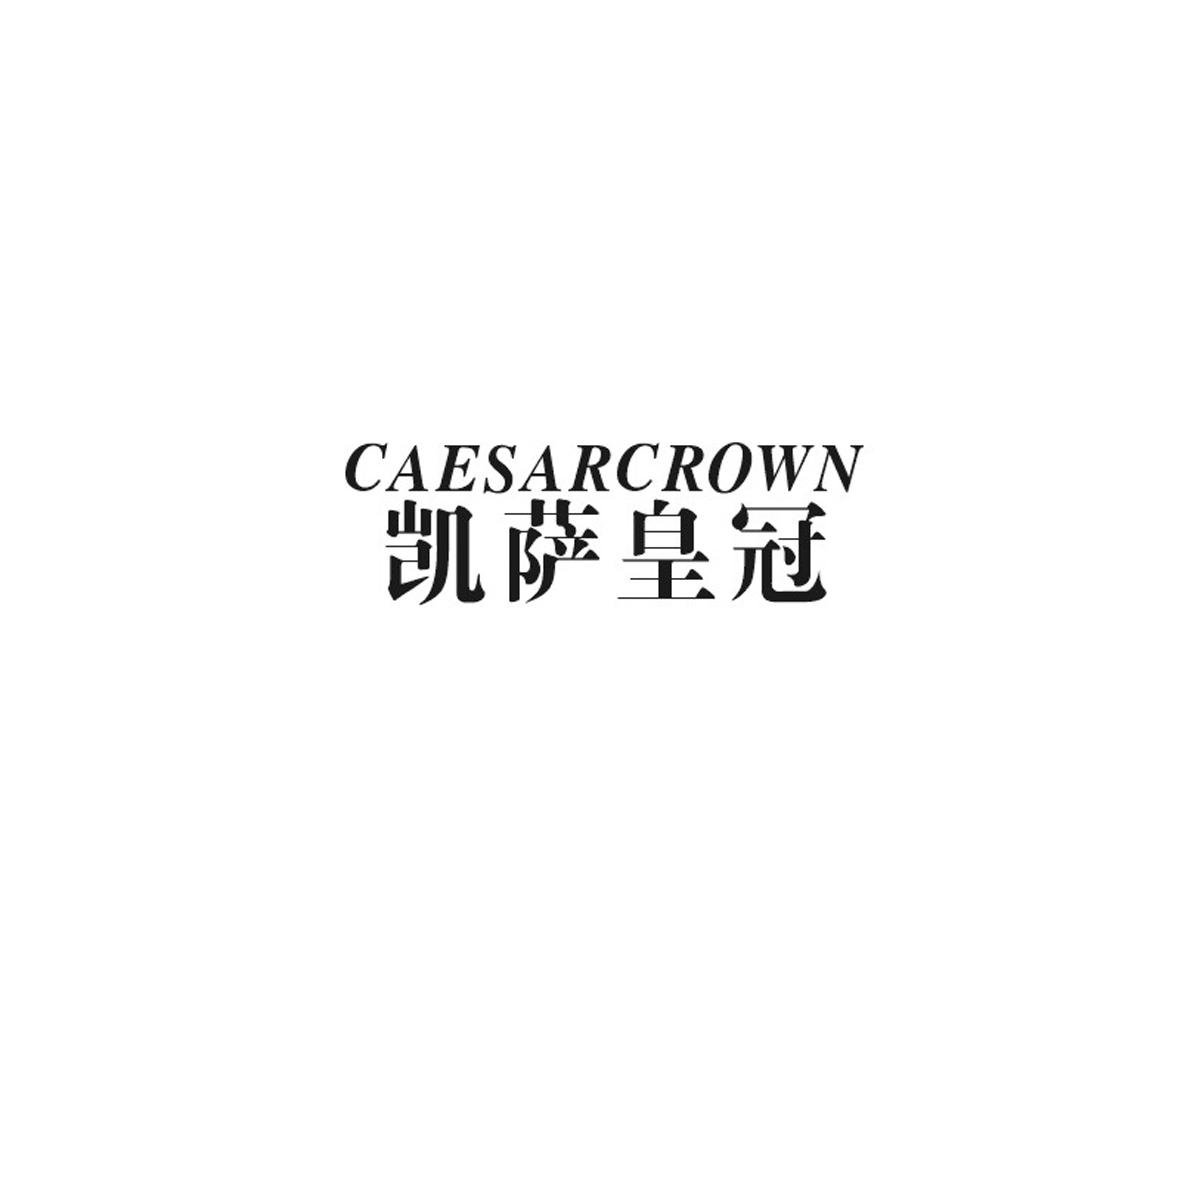 凯萨皇冠 CAESARCROWN商标转让